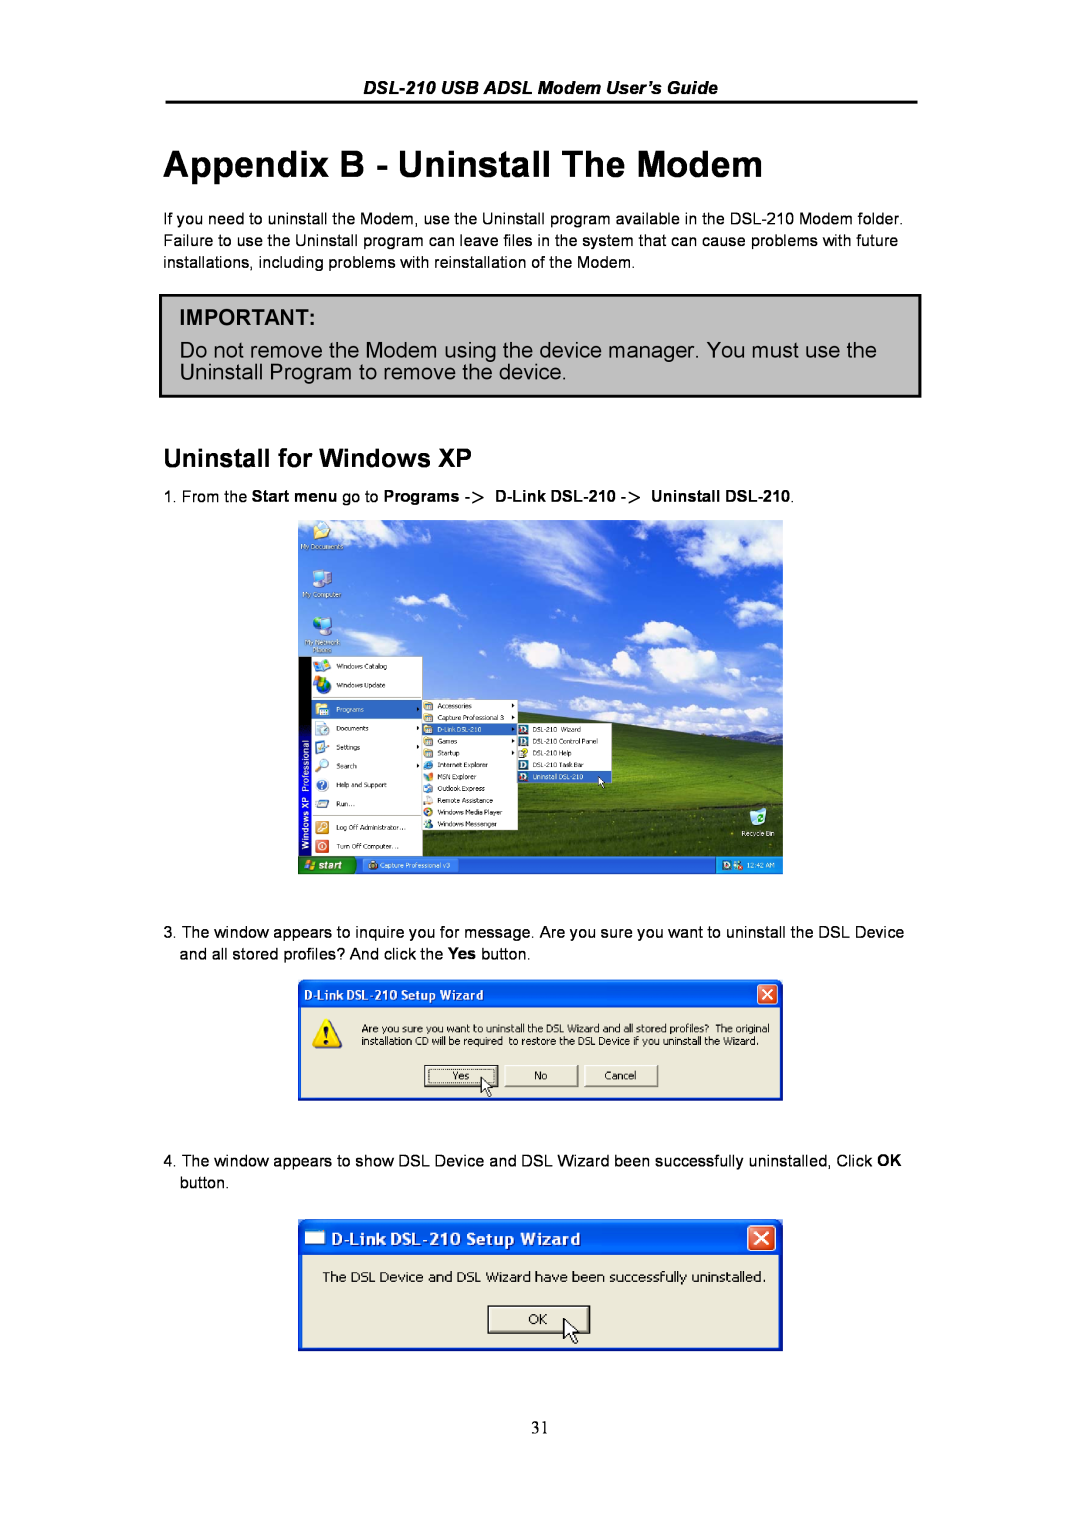 D-Link manual Appendix B - Uninstall The Modem, Uninstall for Windows XP, DSL-210 USB ADSL Modem User’s Guide 